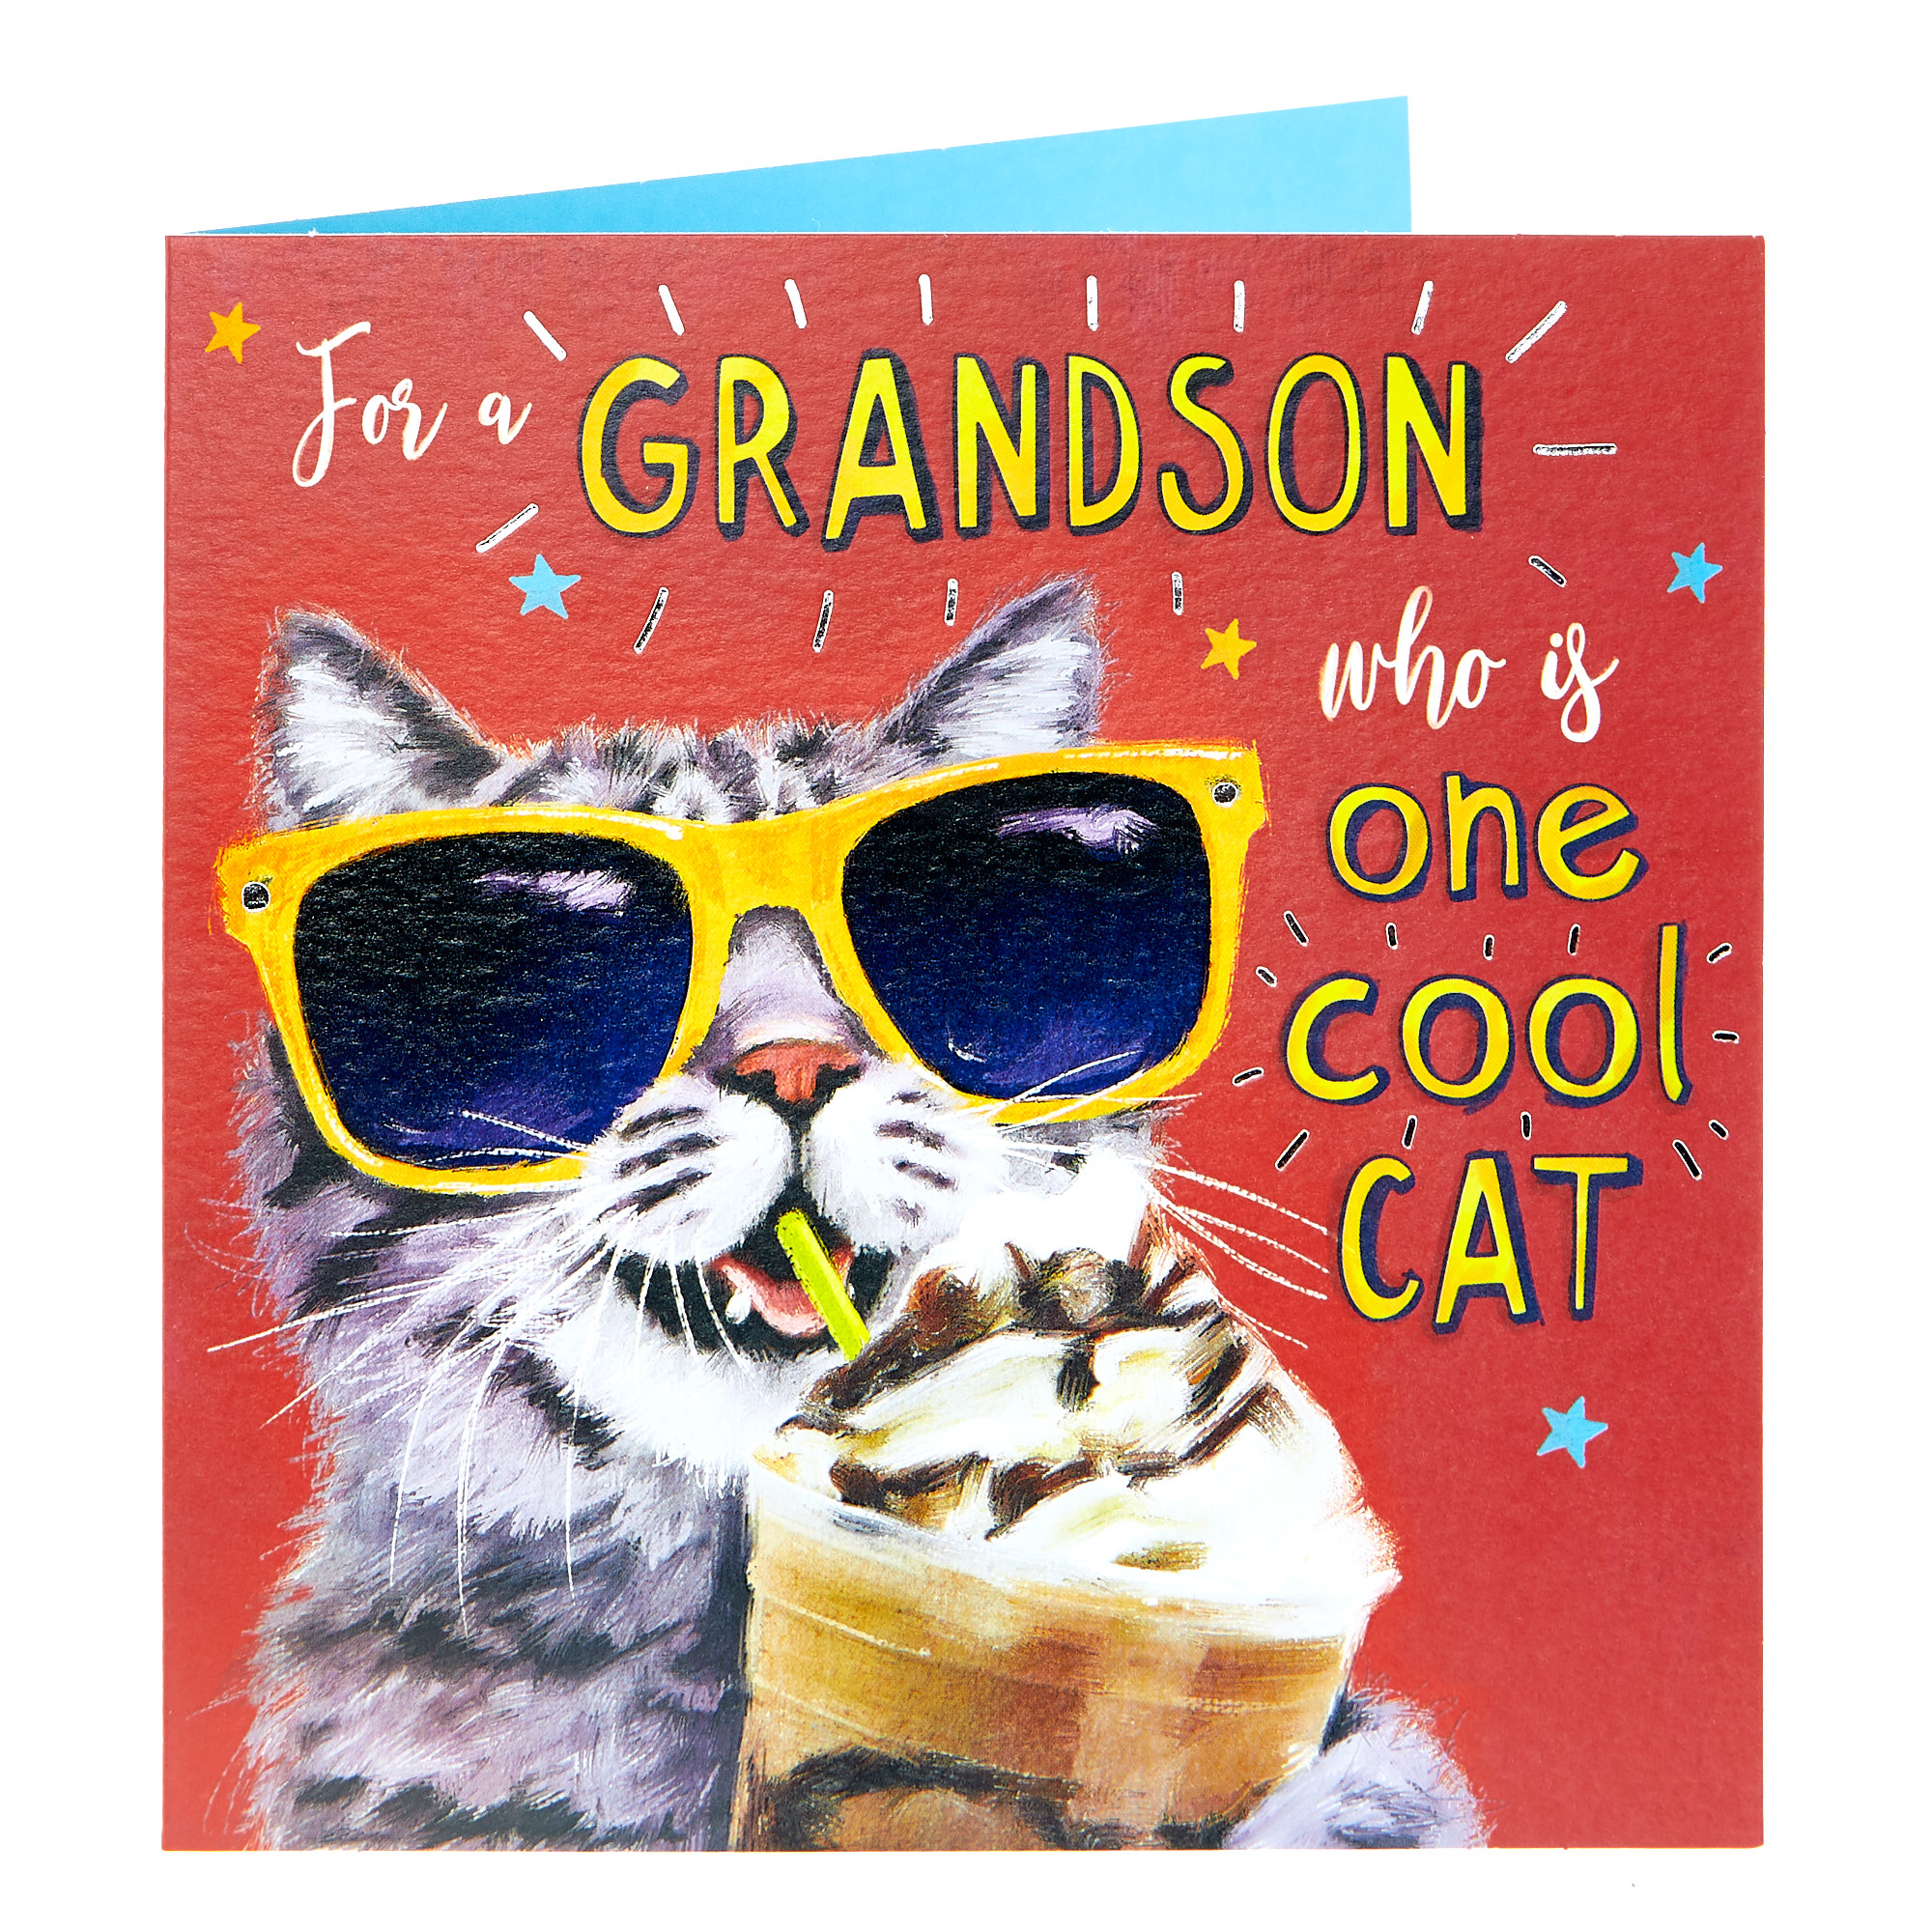 Free Printable Happy Birthday Card For Grandson